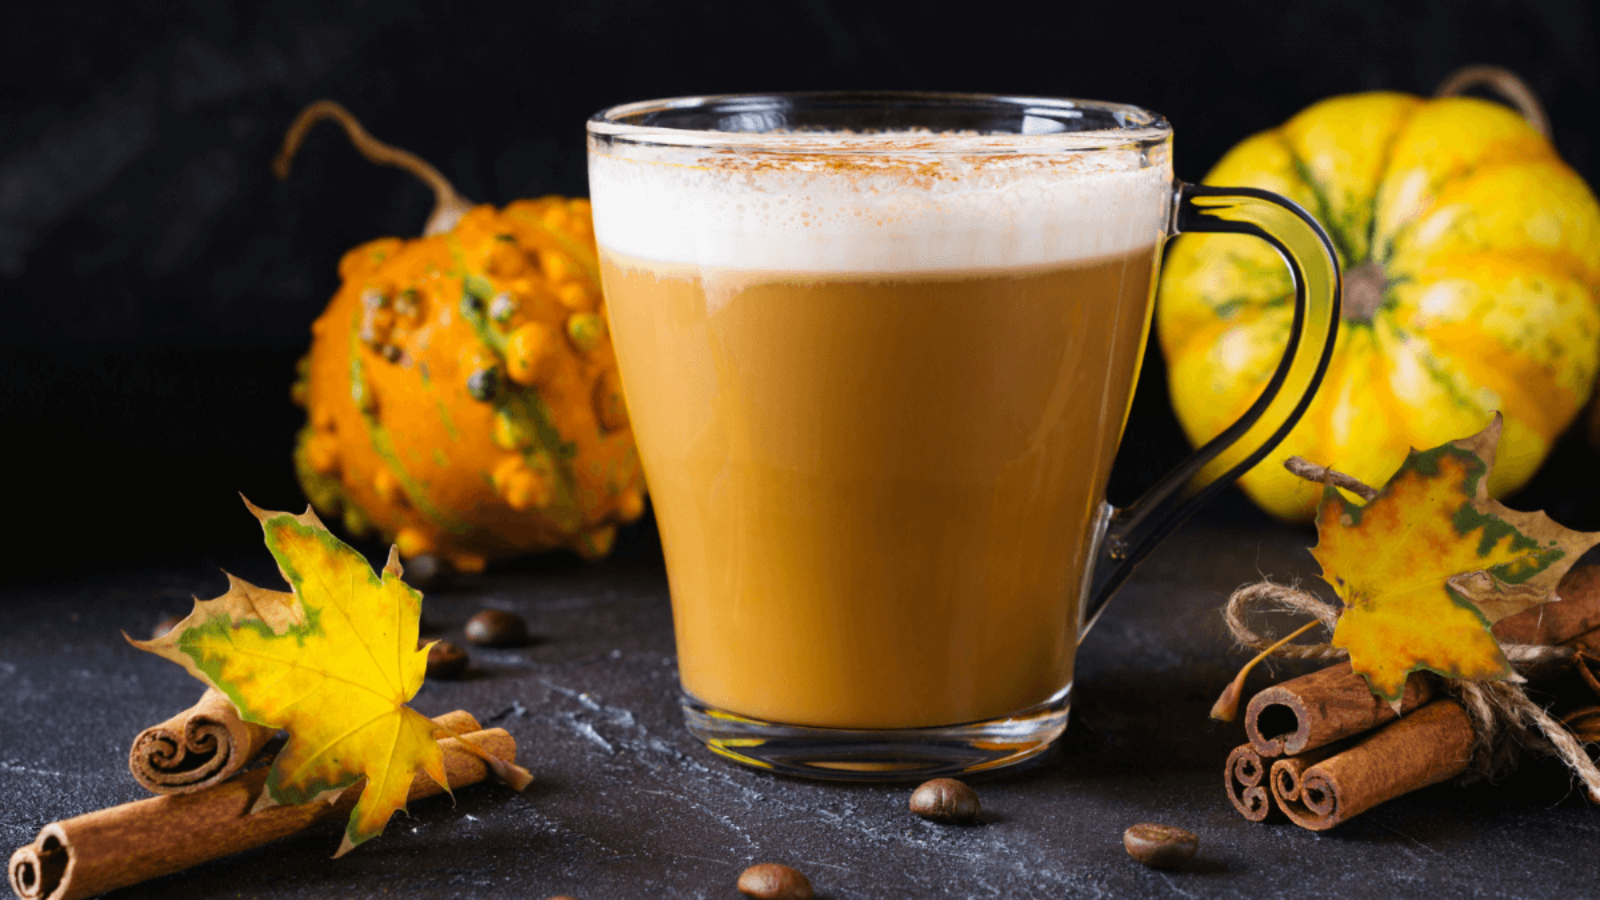 Starbucks Pumpkin Spice Latte: Sugar-Free recipe